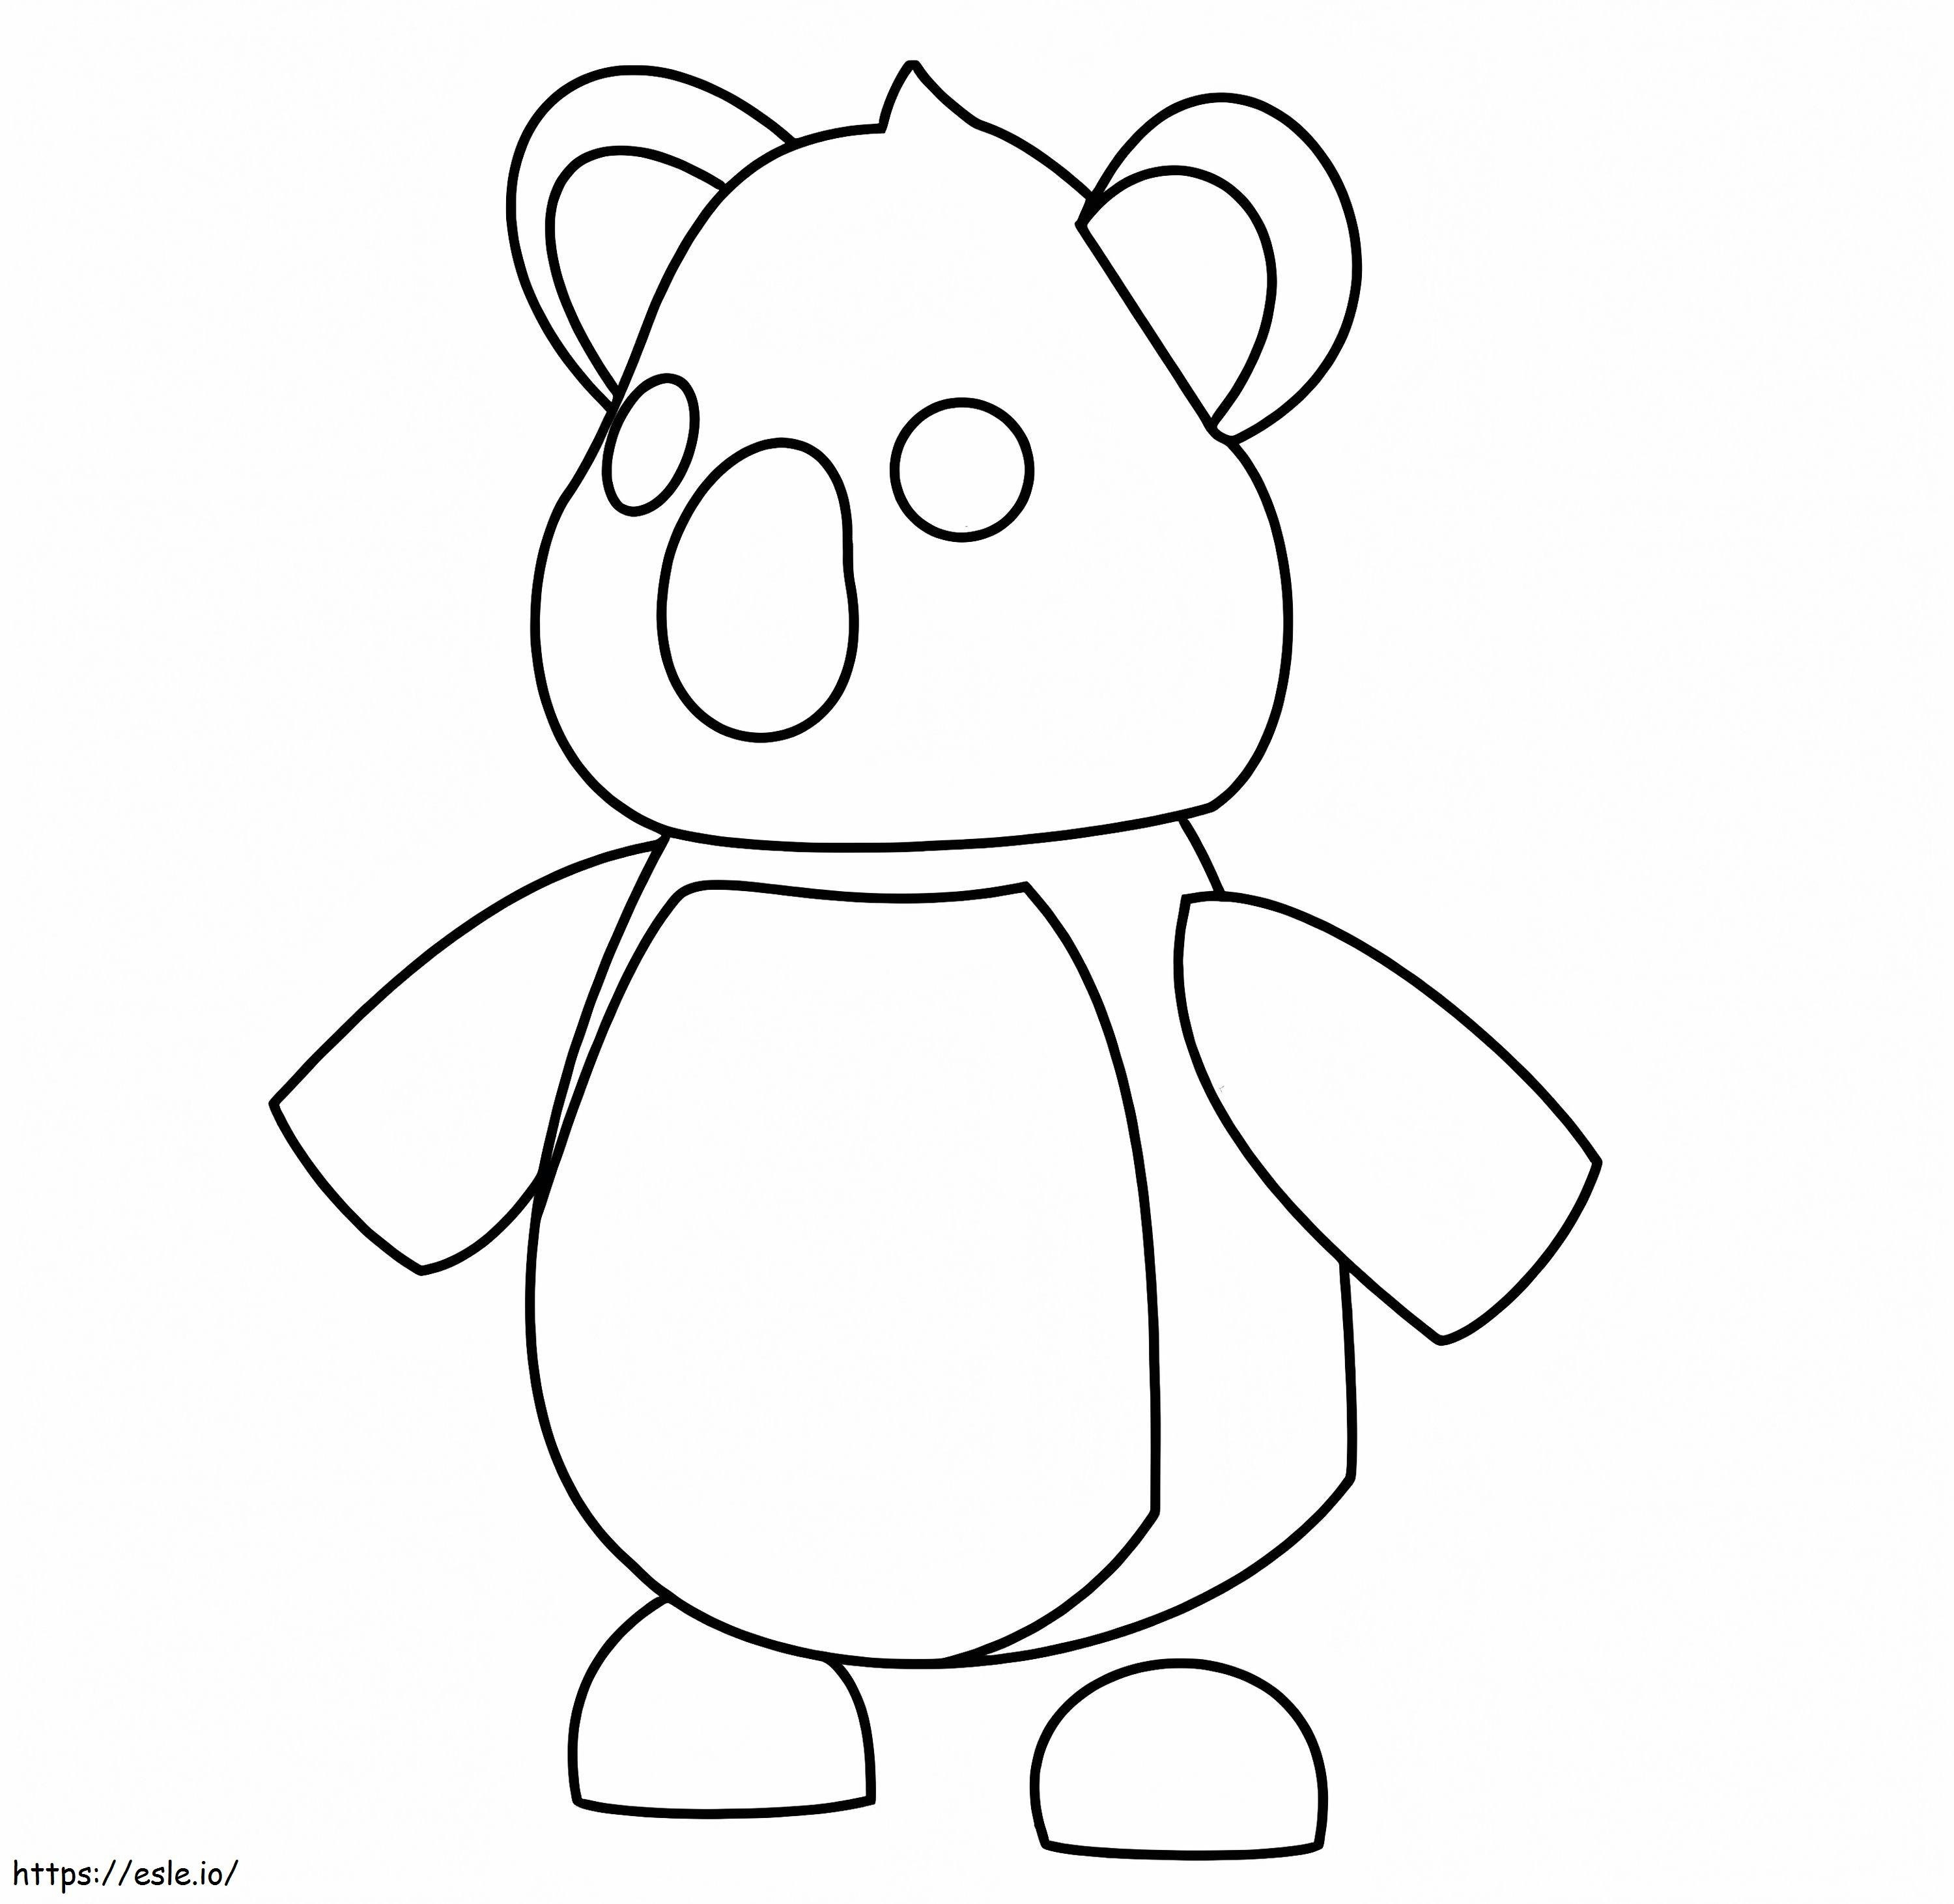 Koala Adopt Me coloring page